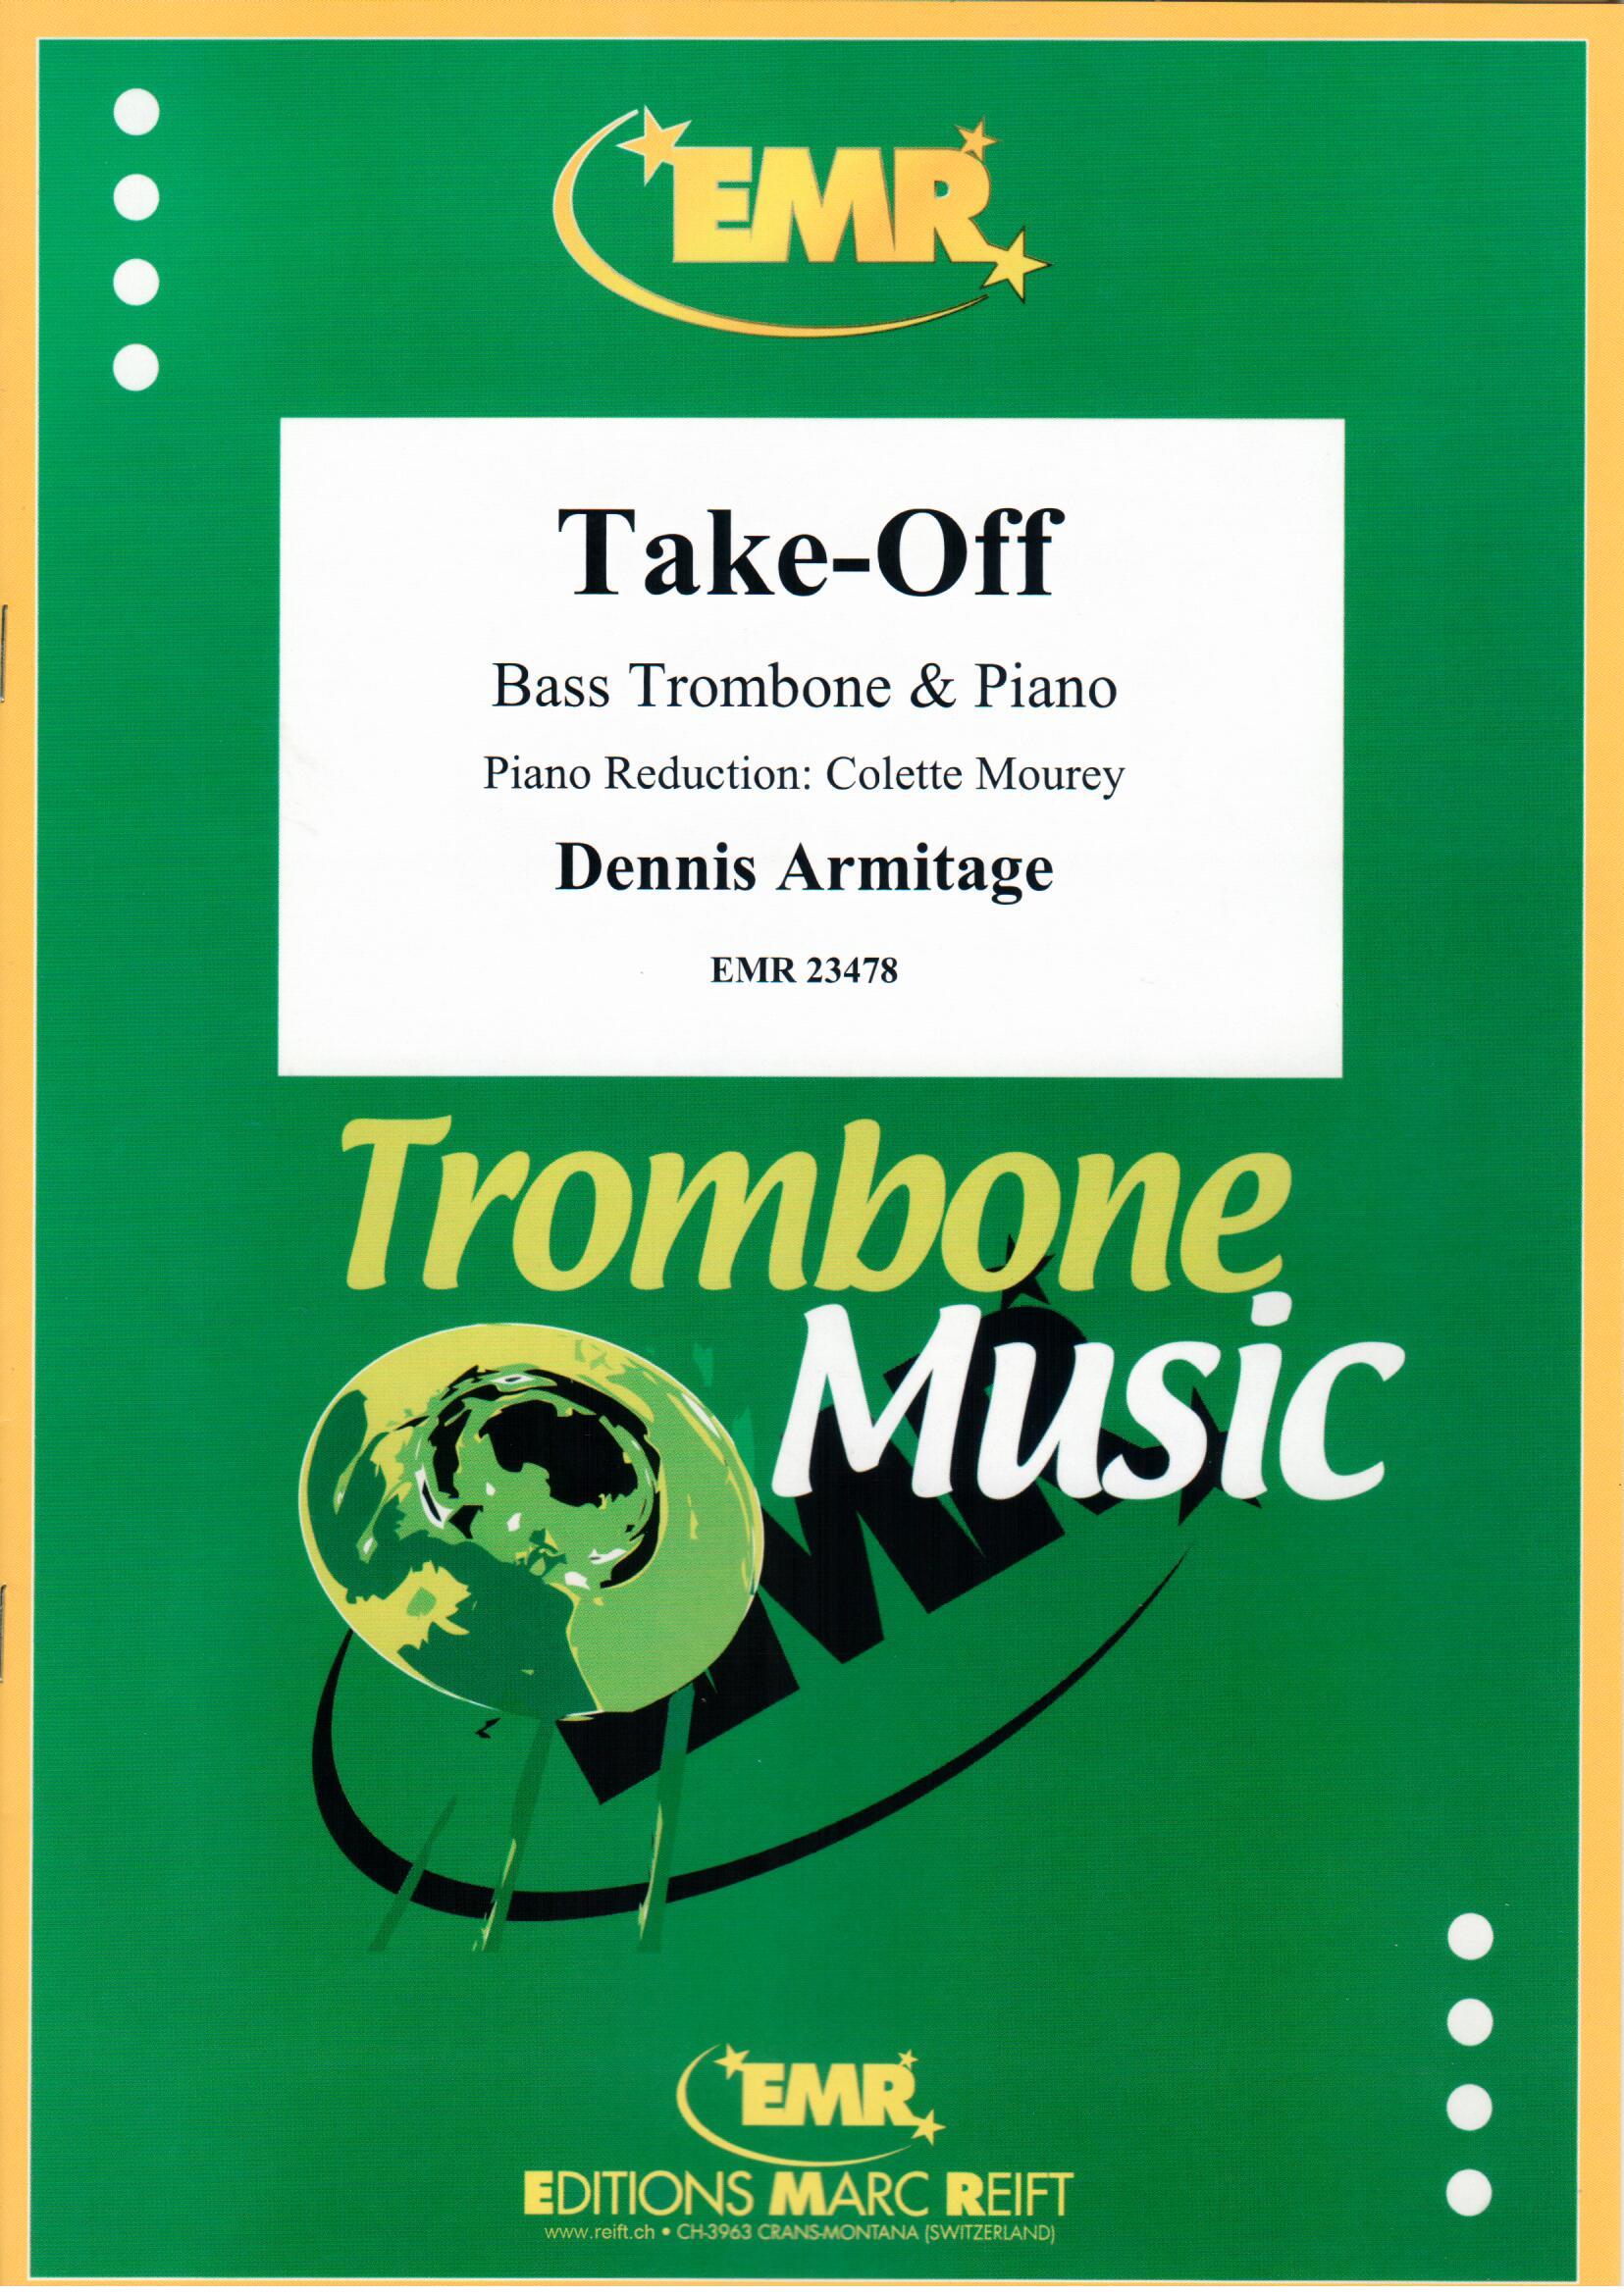 TAKE-OFF, EMR Bass Trombone